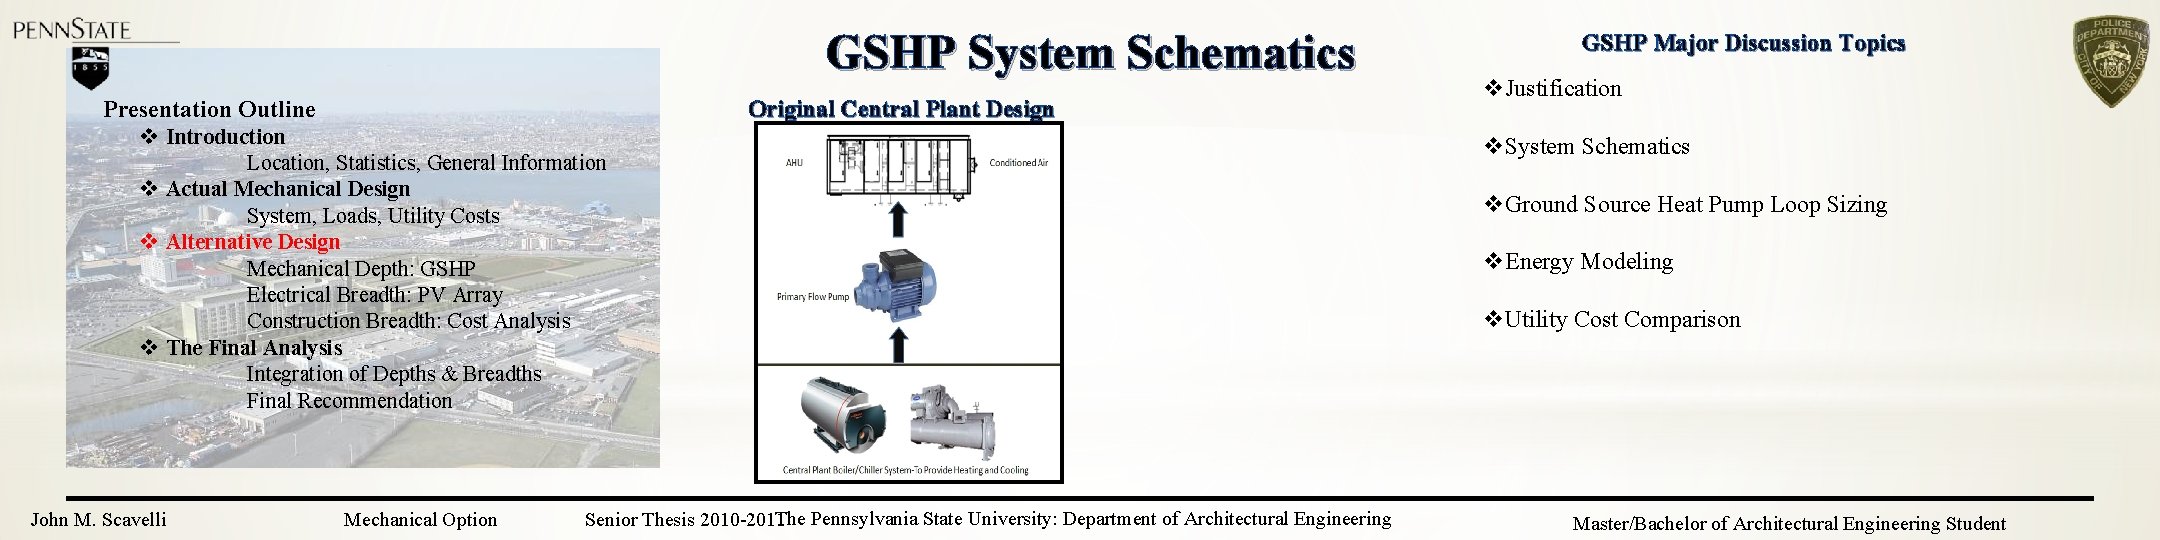 GSHP System Schematics Presentation Outline Original Central Plant Design v Introduction Location, Statistics, General